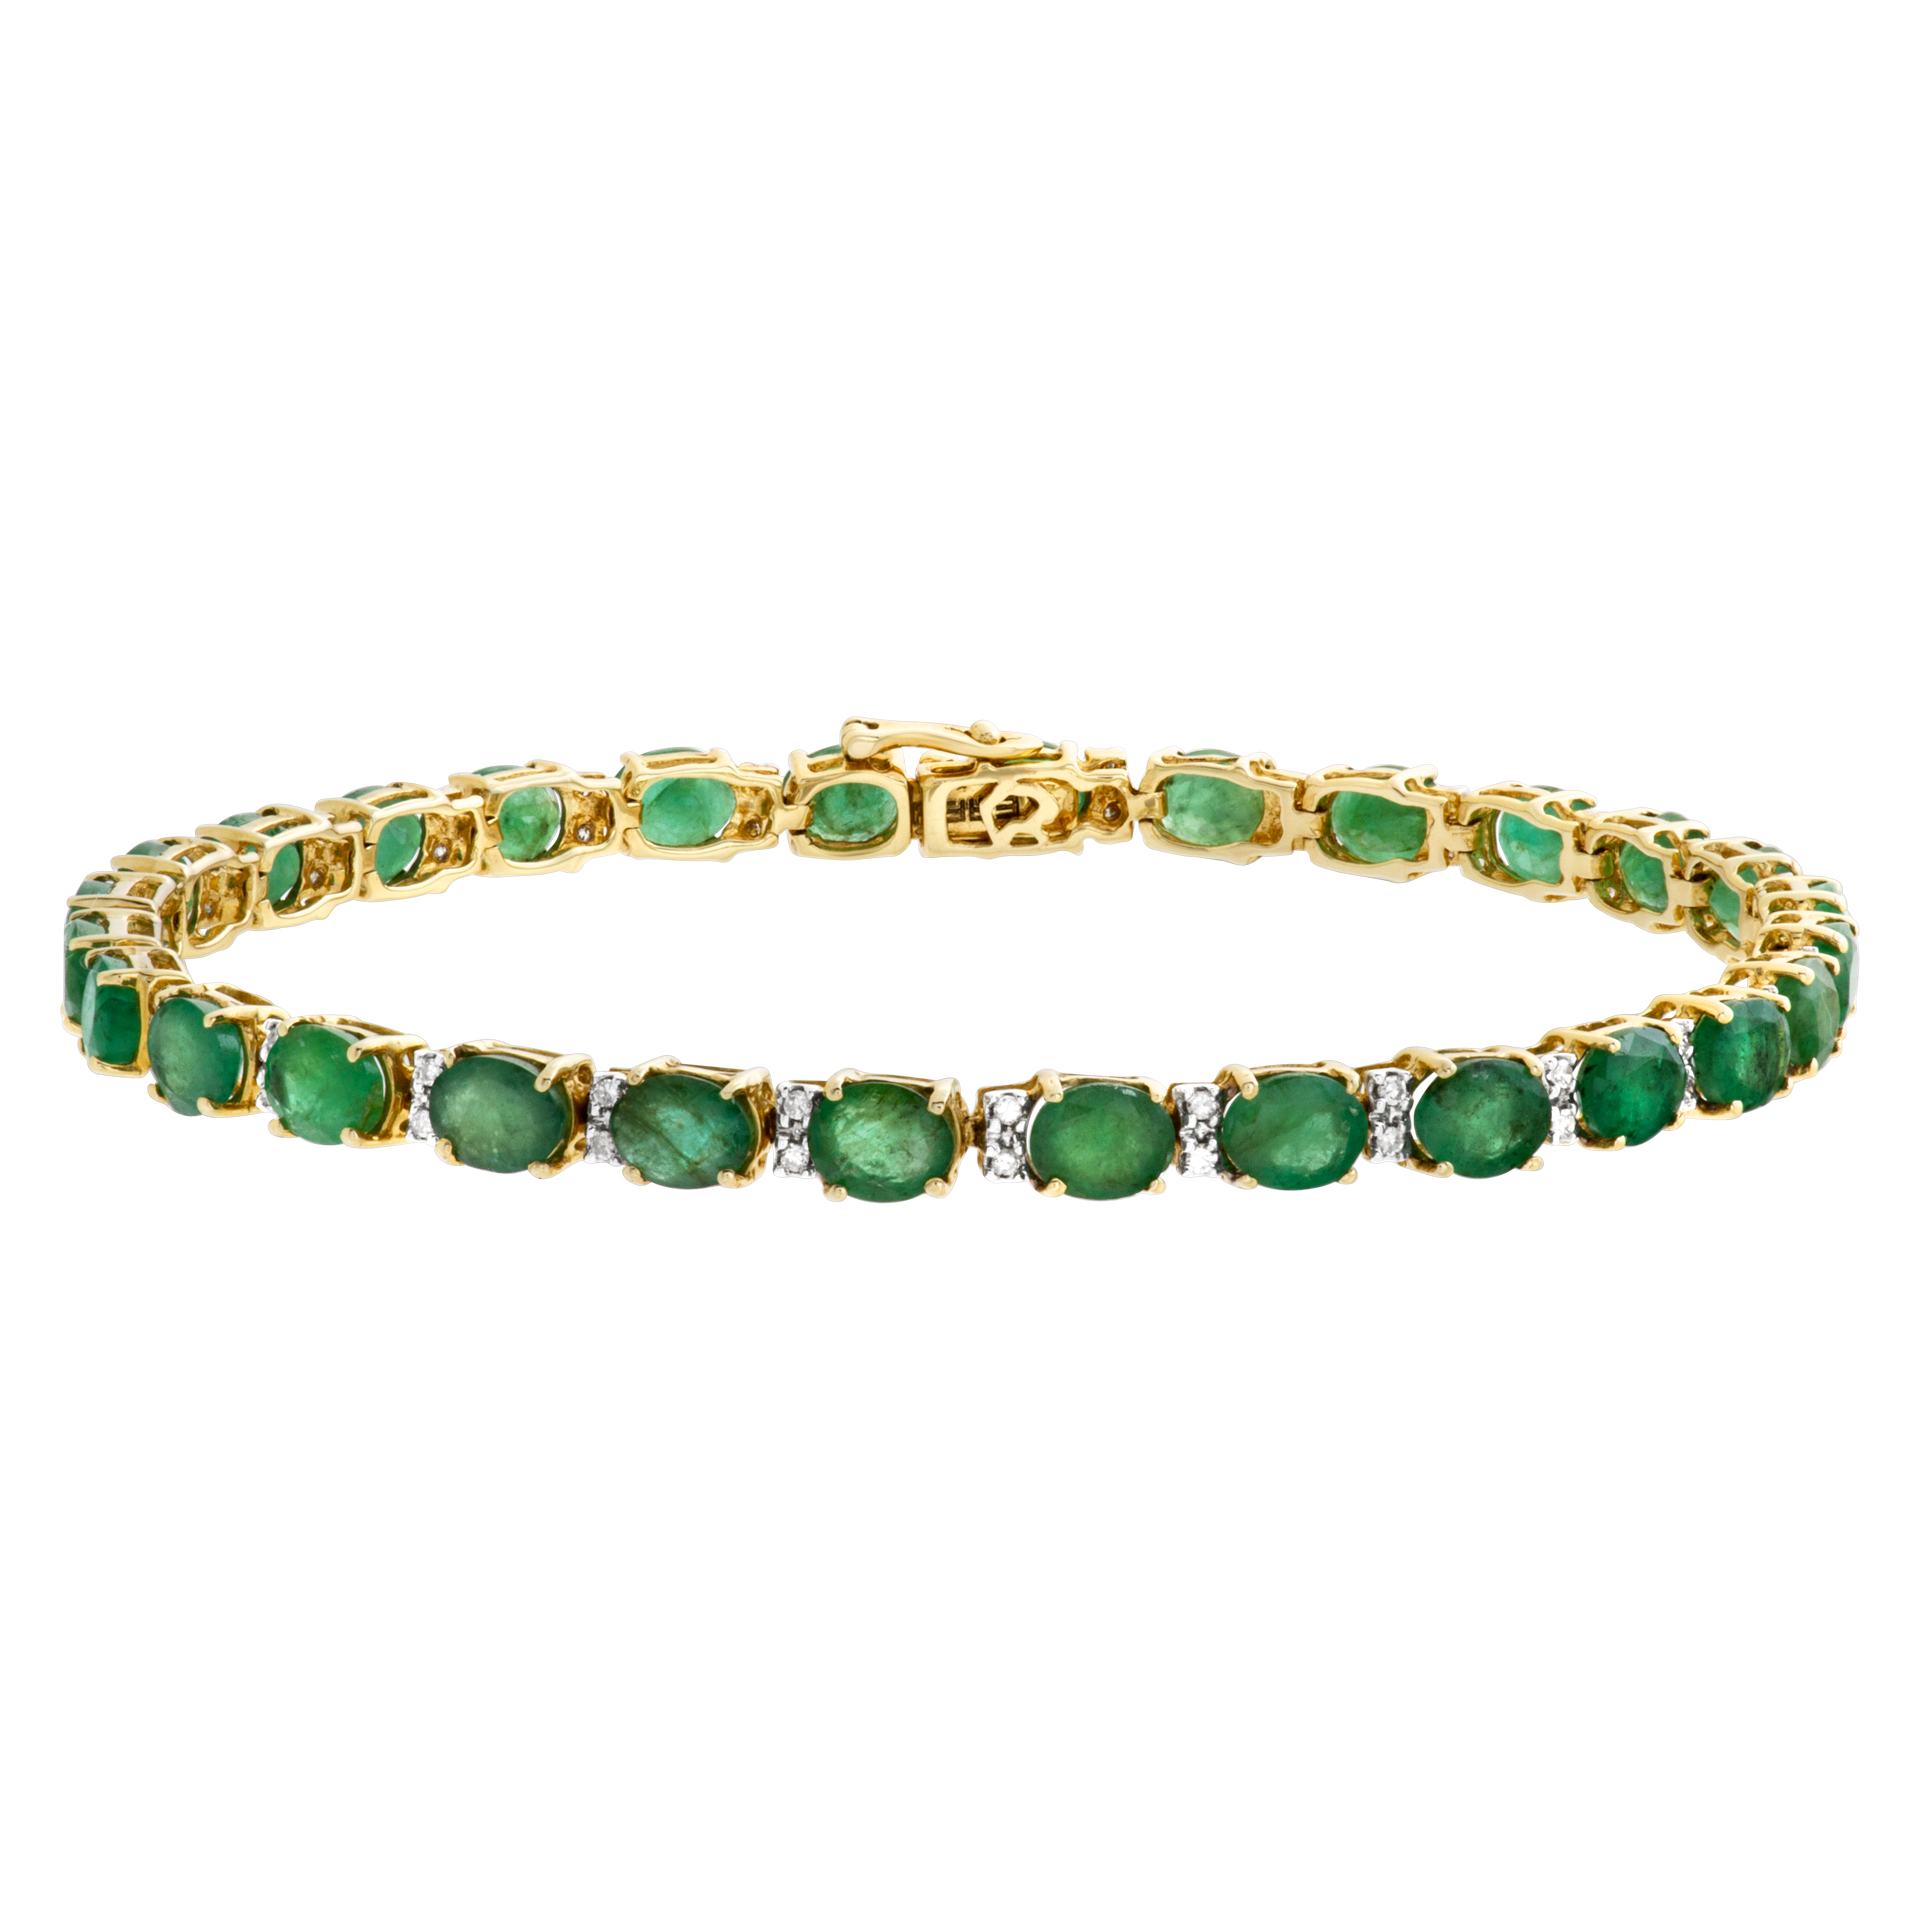 Emerald and diamond line bracelet in 14k